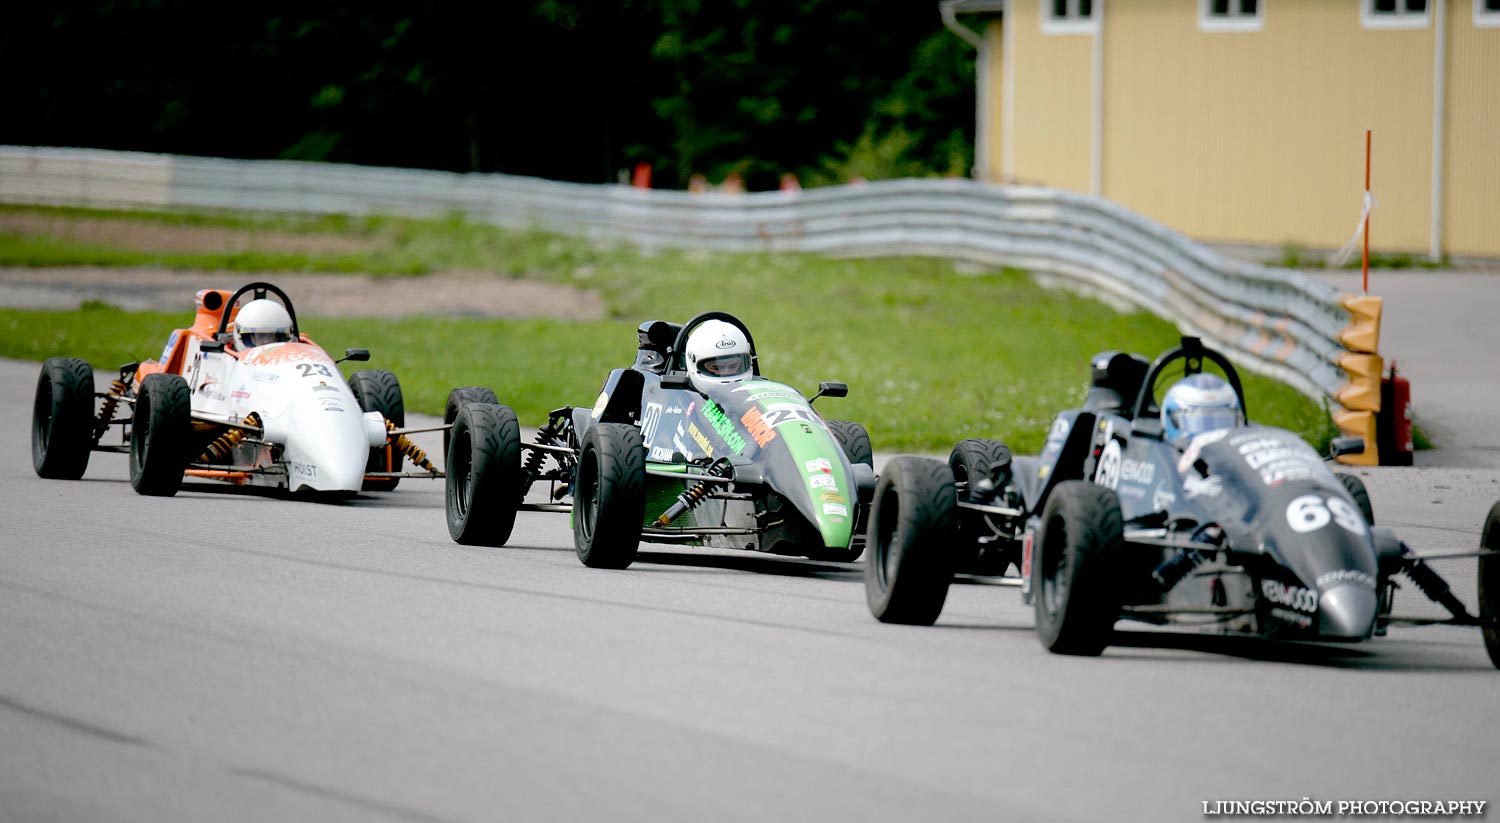 SSK Raceweek,mix,Kinnekulle Ring,Götene,Sverige,Motorsport,,2009,107608